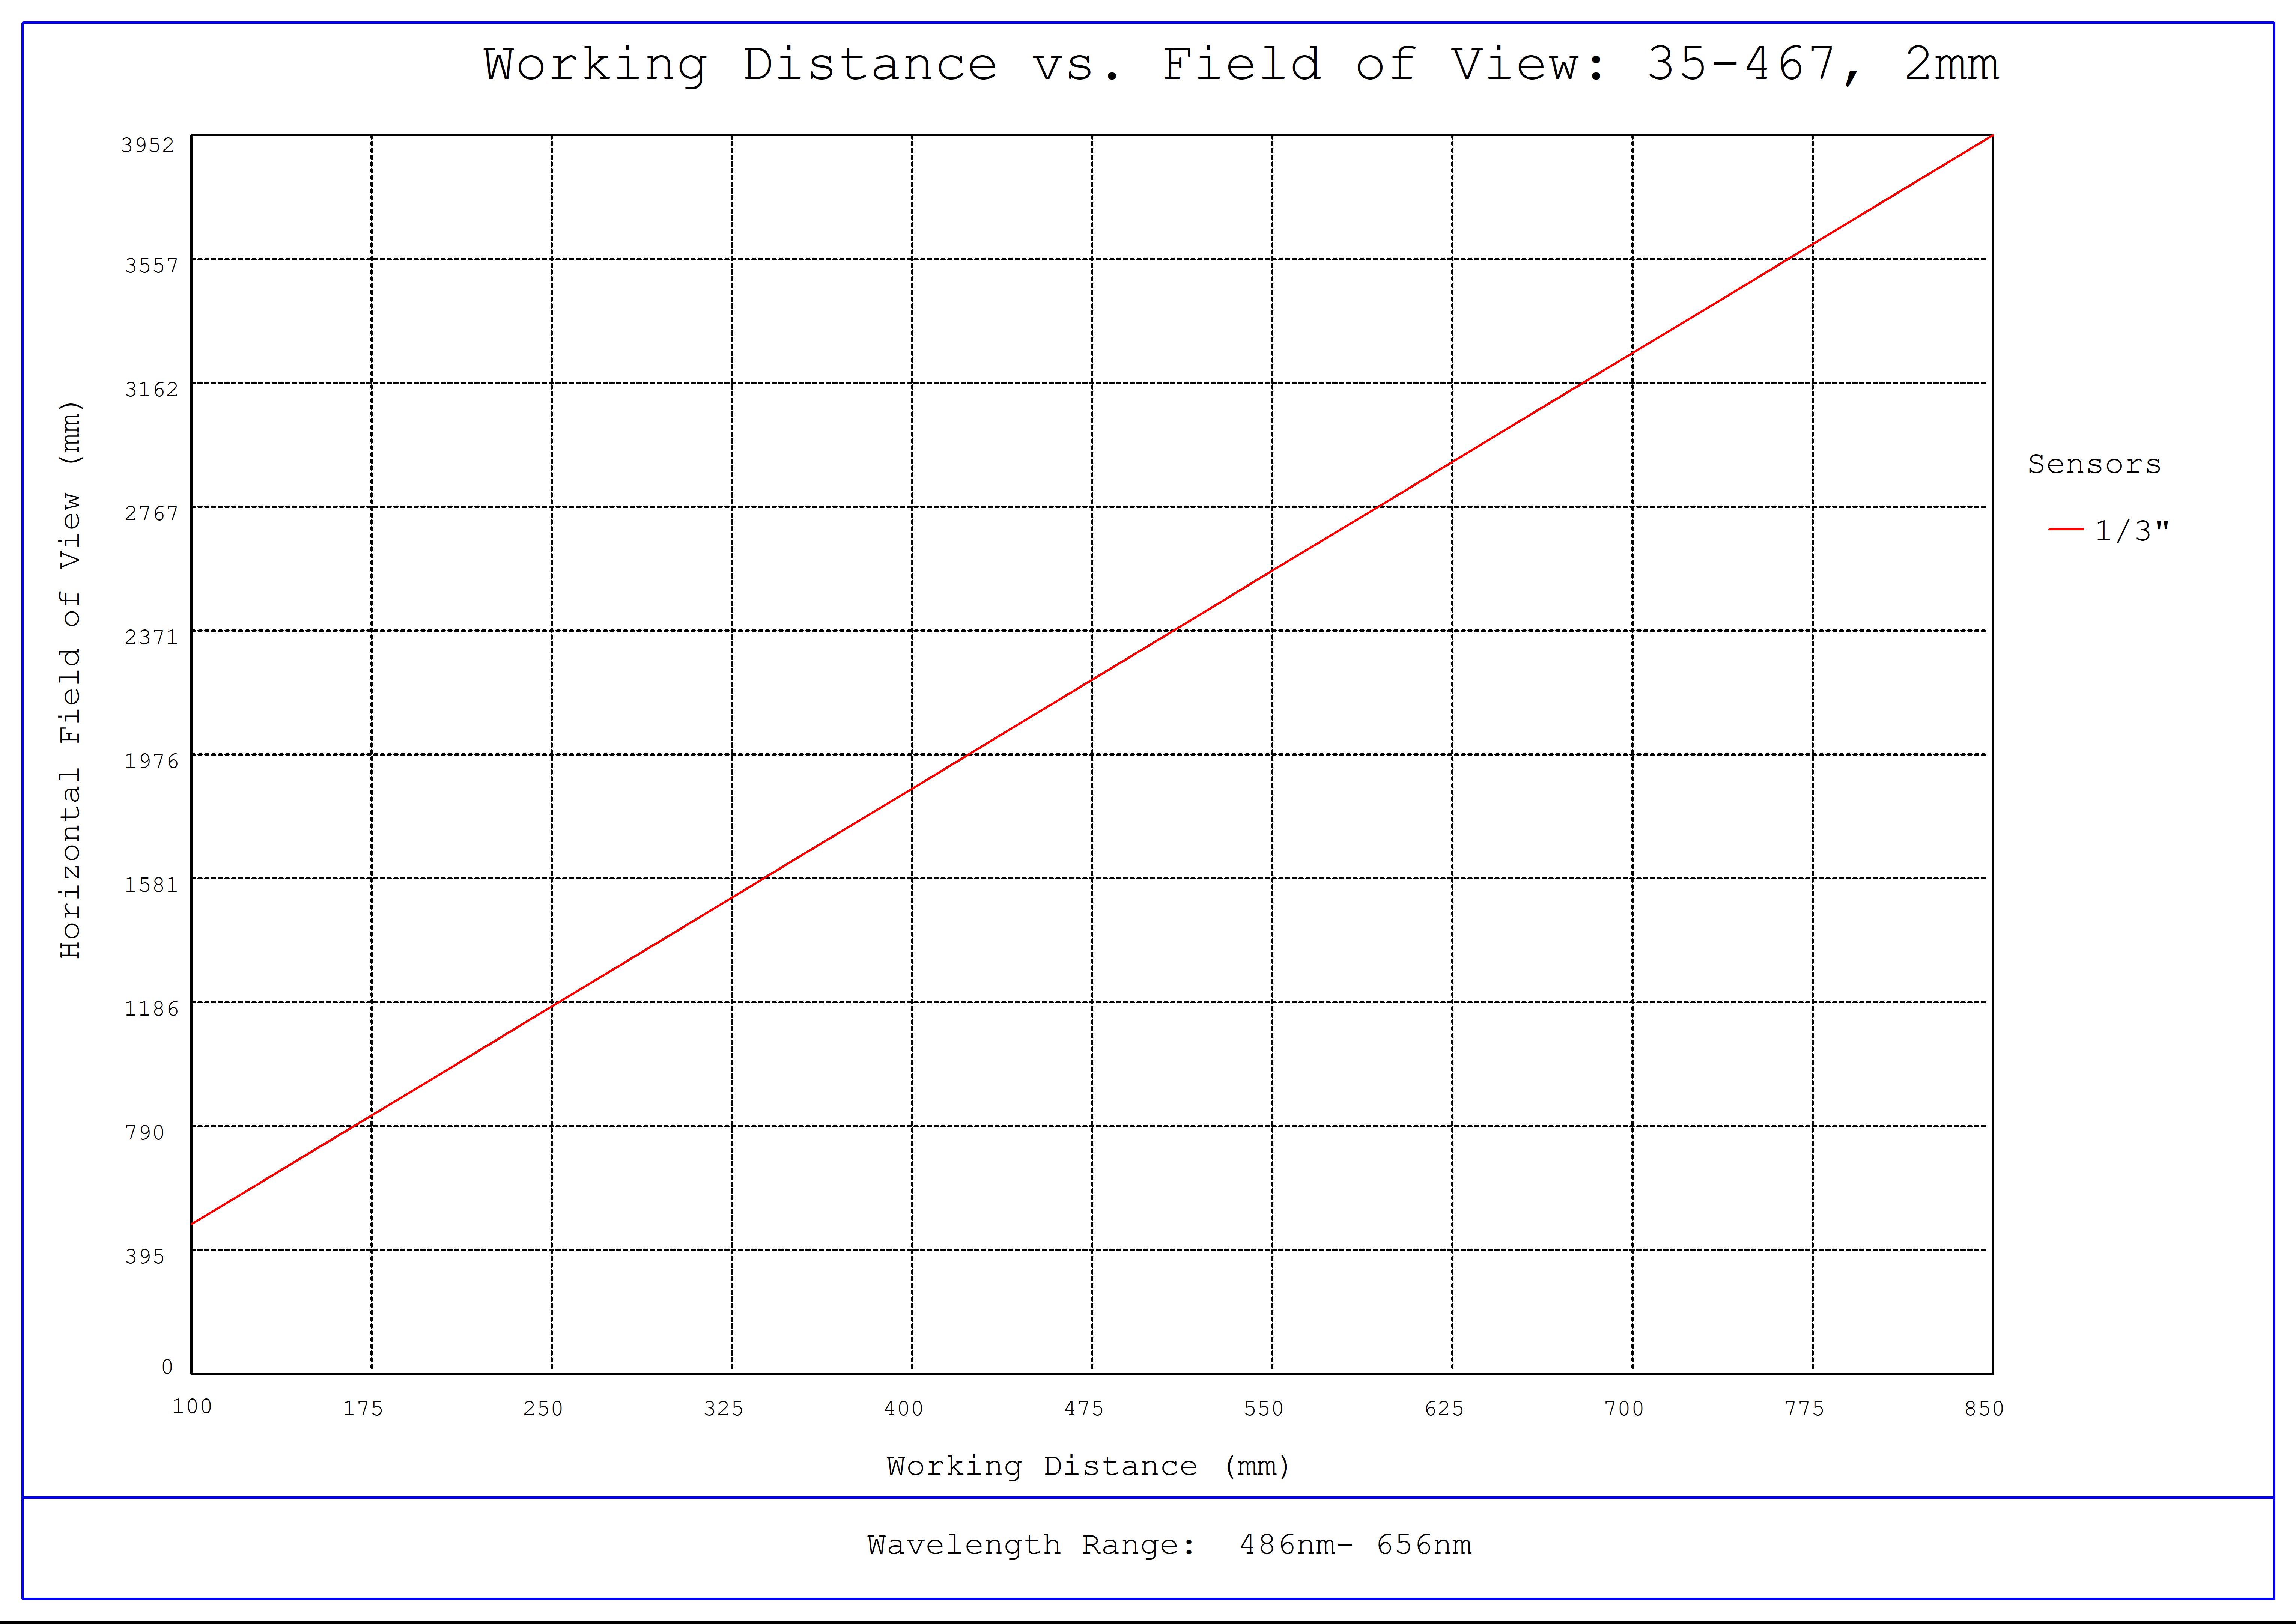 #35-467, 2mm FL f/5.6 IR-Cut, Blue Series M12 Lens, Working Distance versus Field of View Plot